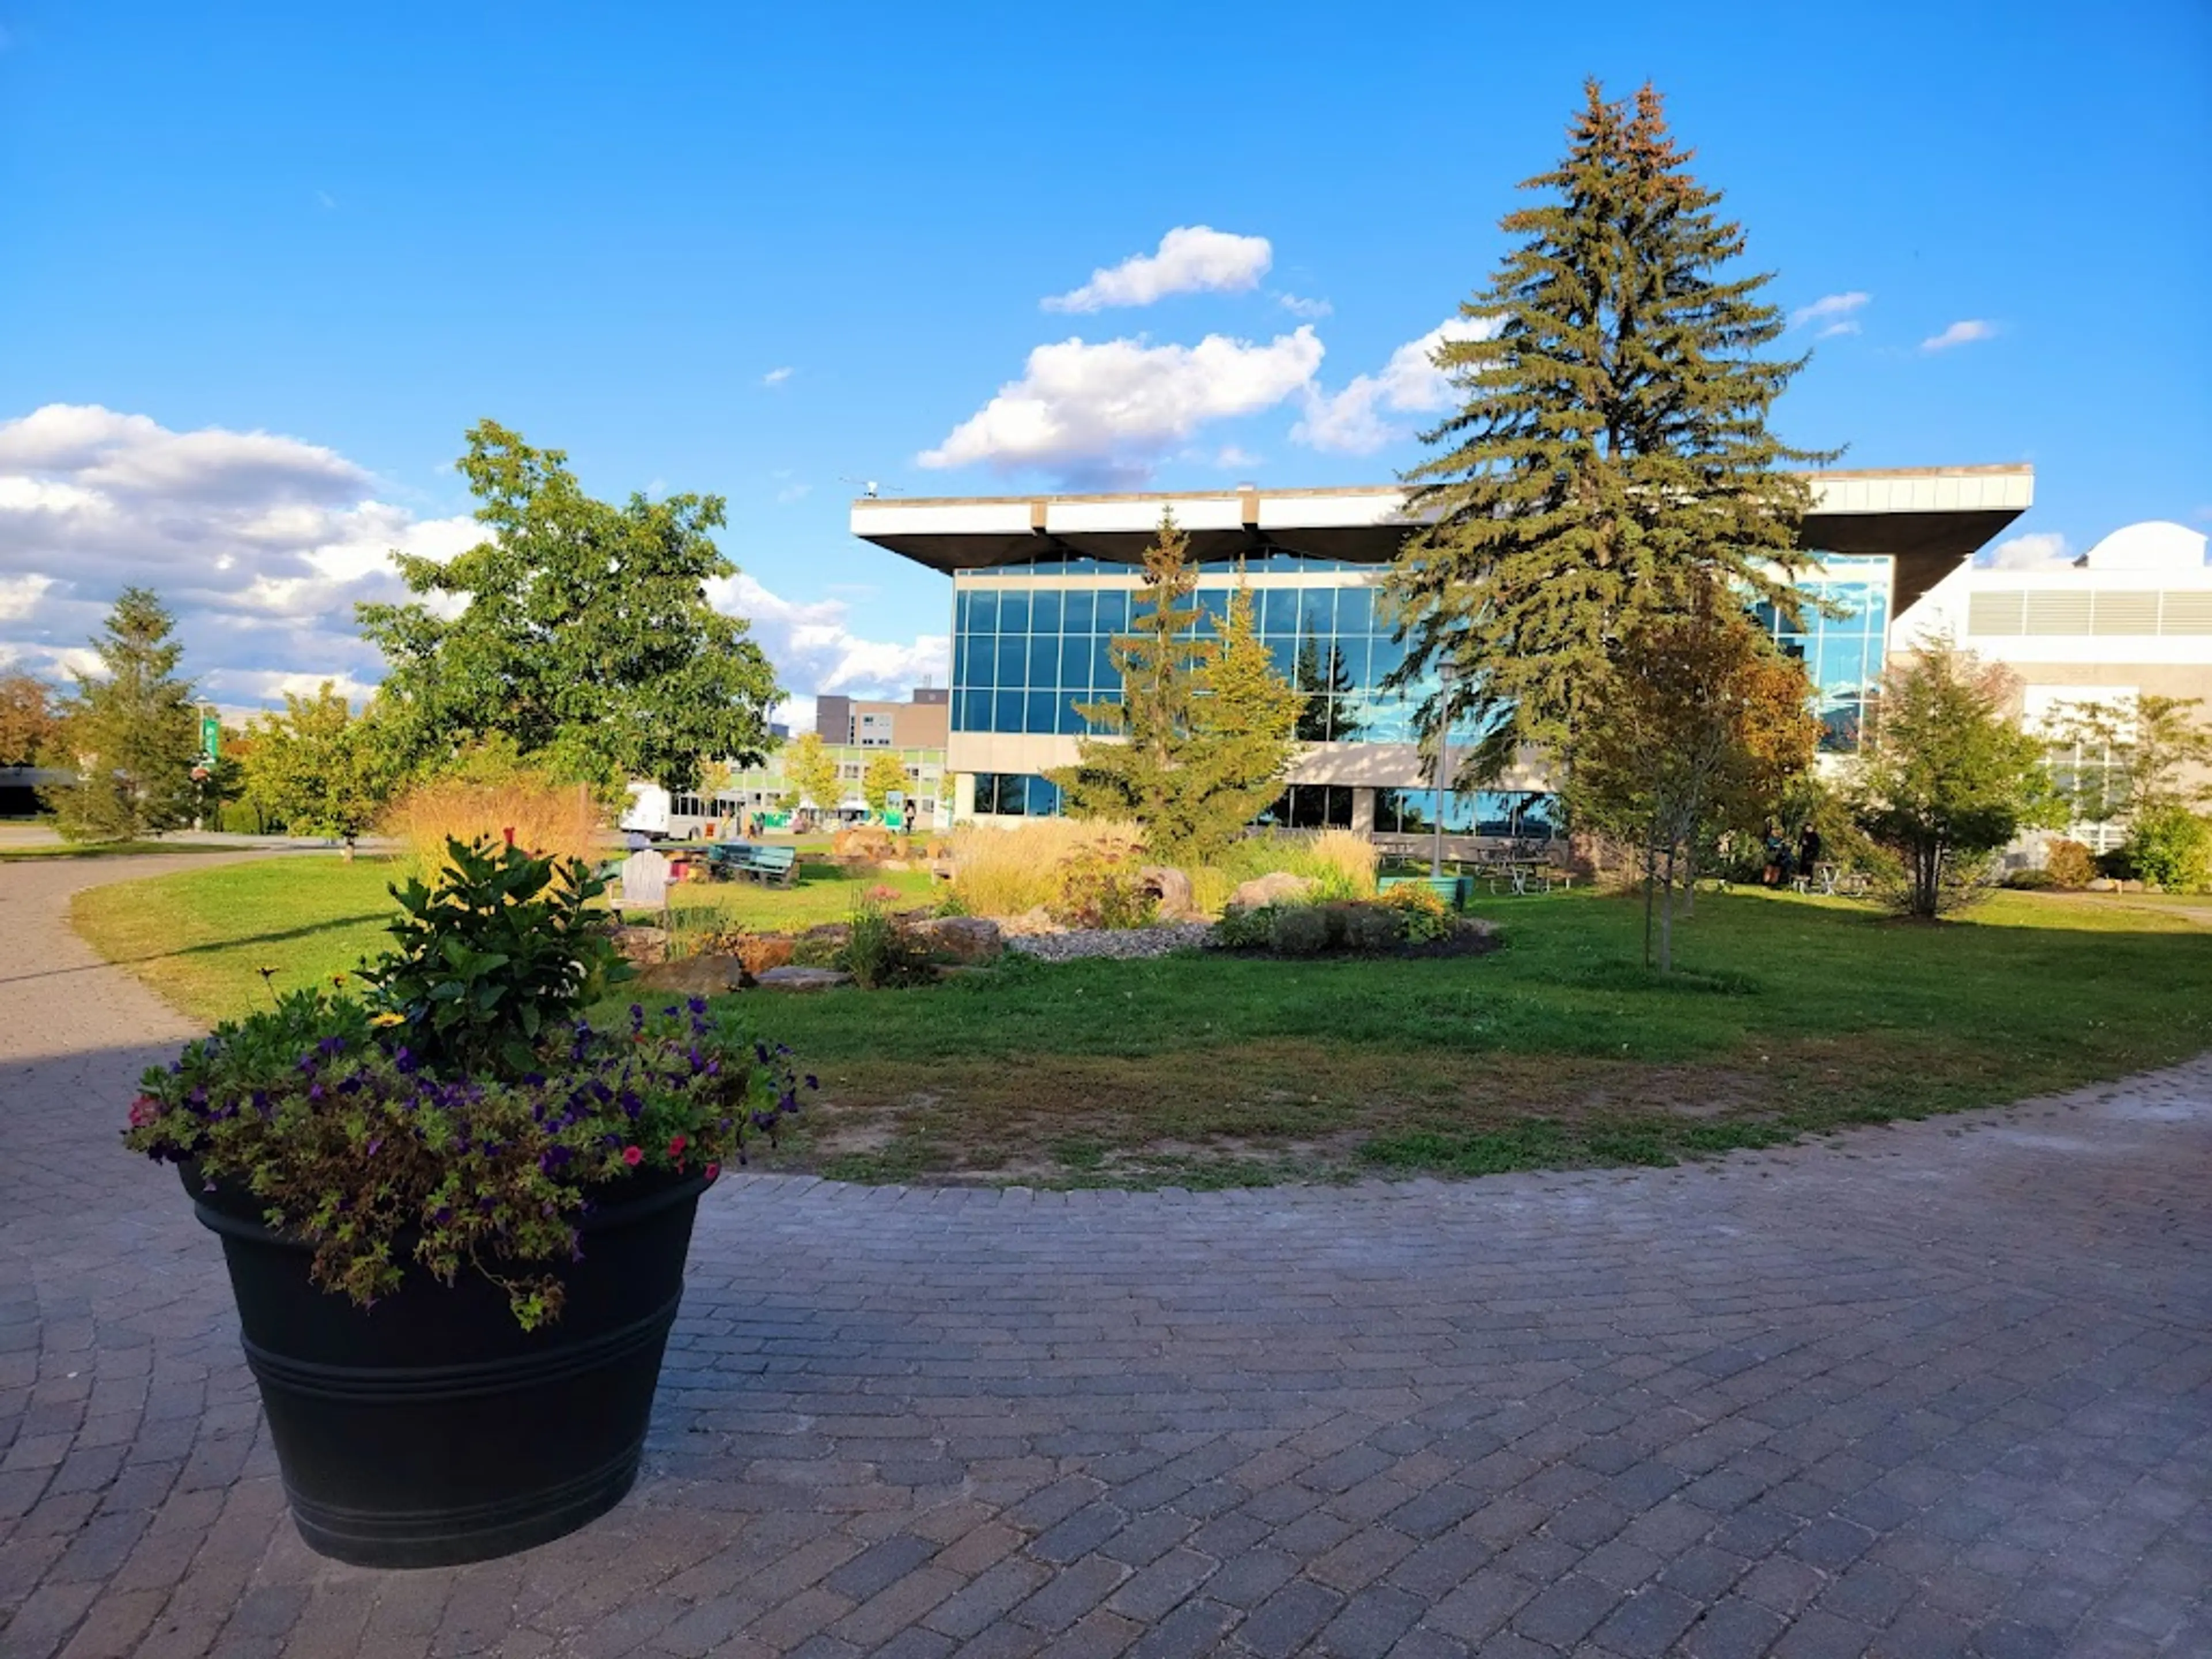 University of Sherbrooke Botanical Garden